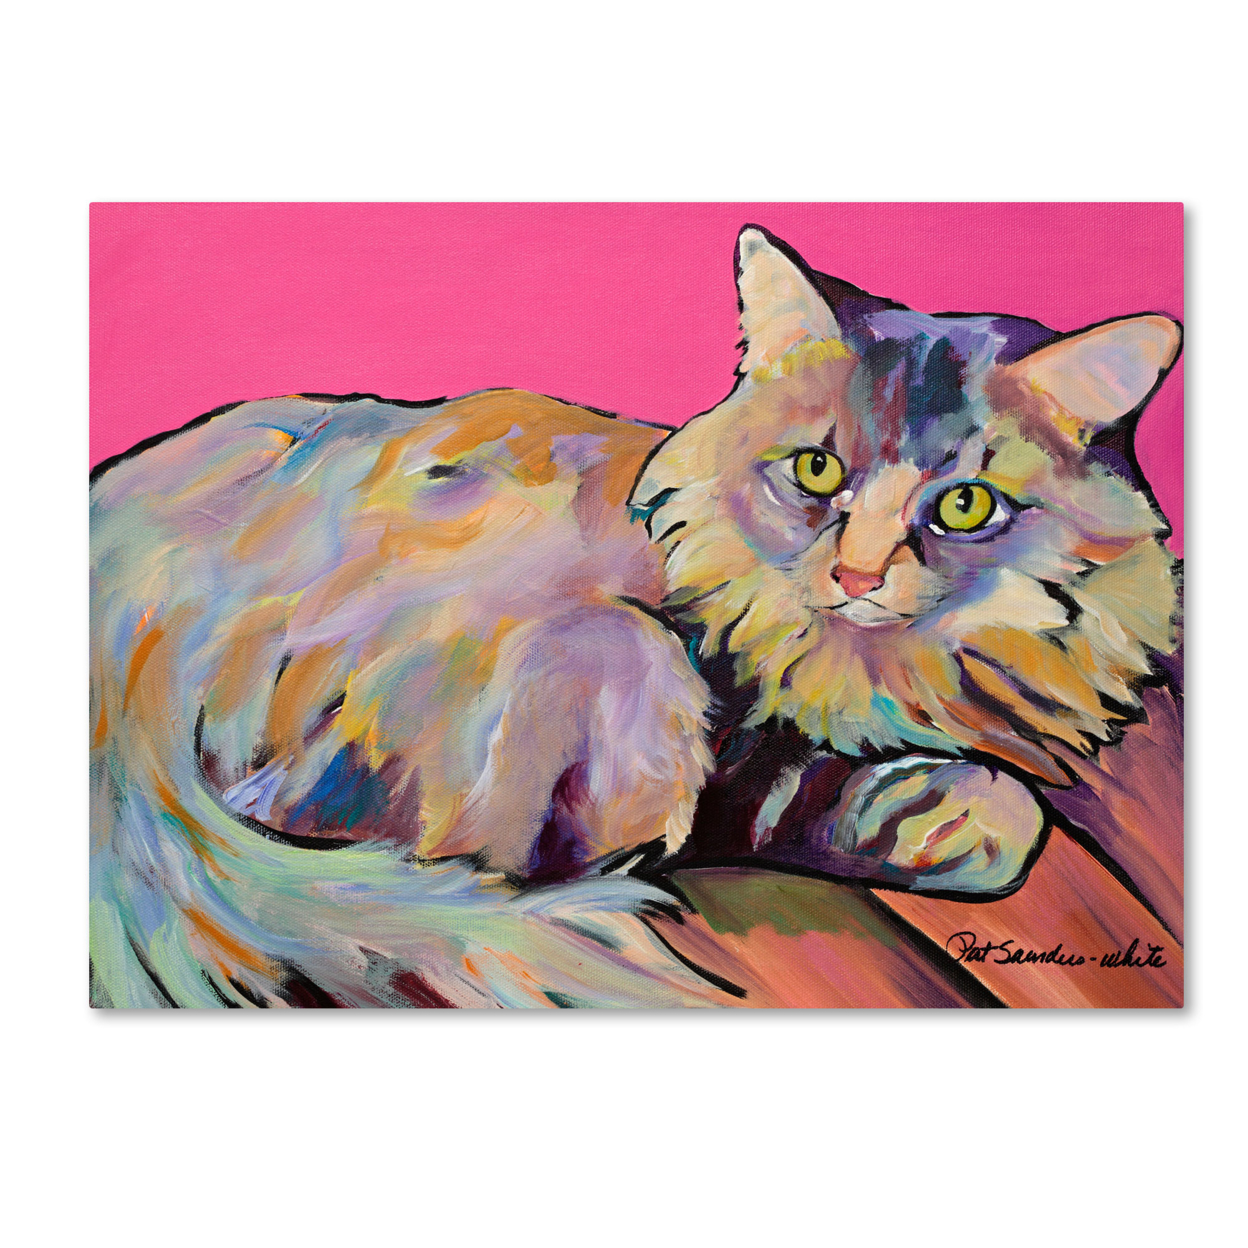 Pat Saunders 'Catatonic' Canvas Art 18 X 24